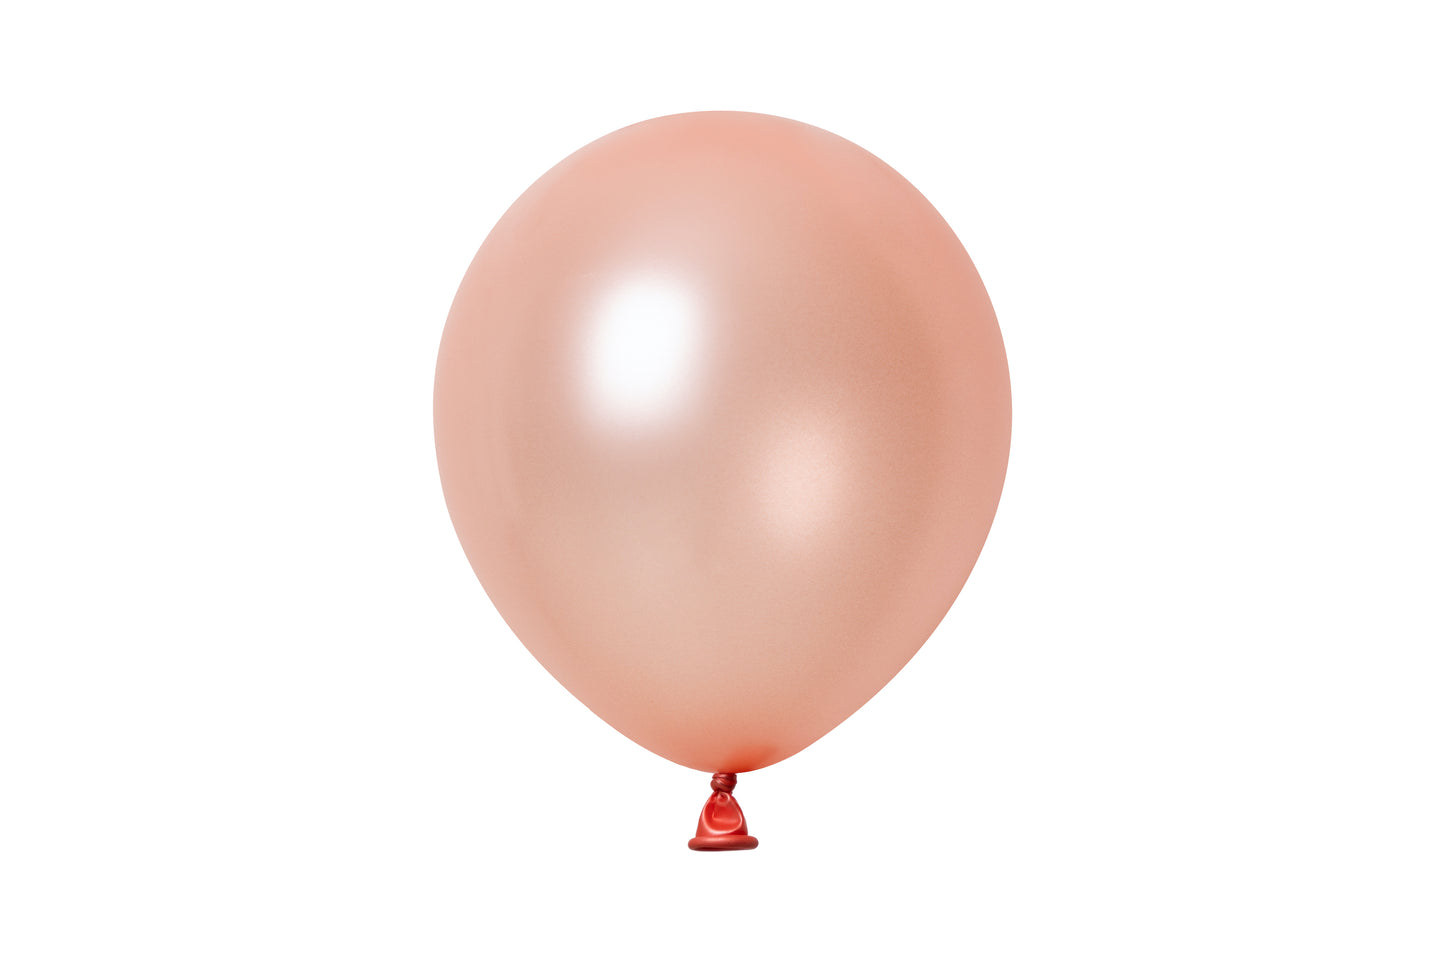 Winntex Premium 5" Latex Balloon - Met. Rose Gold - 100ct